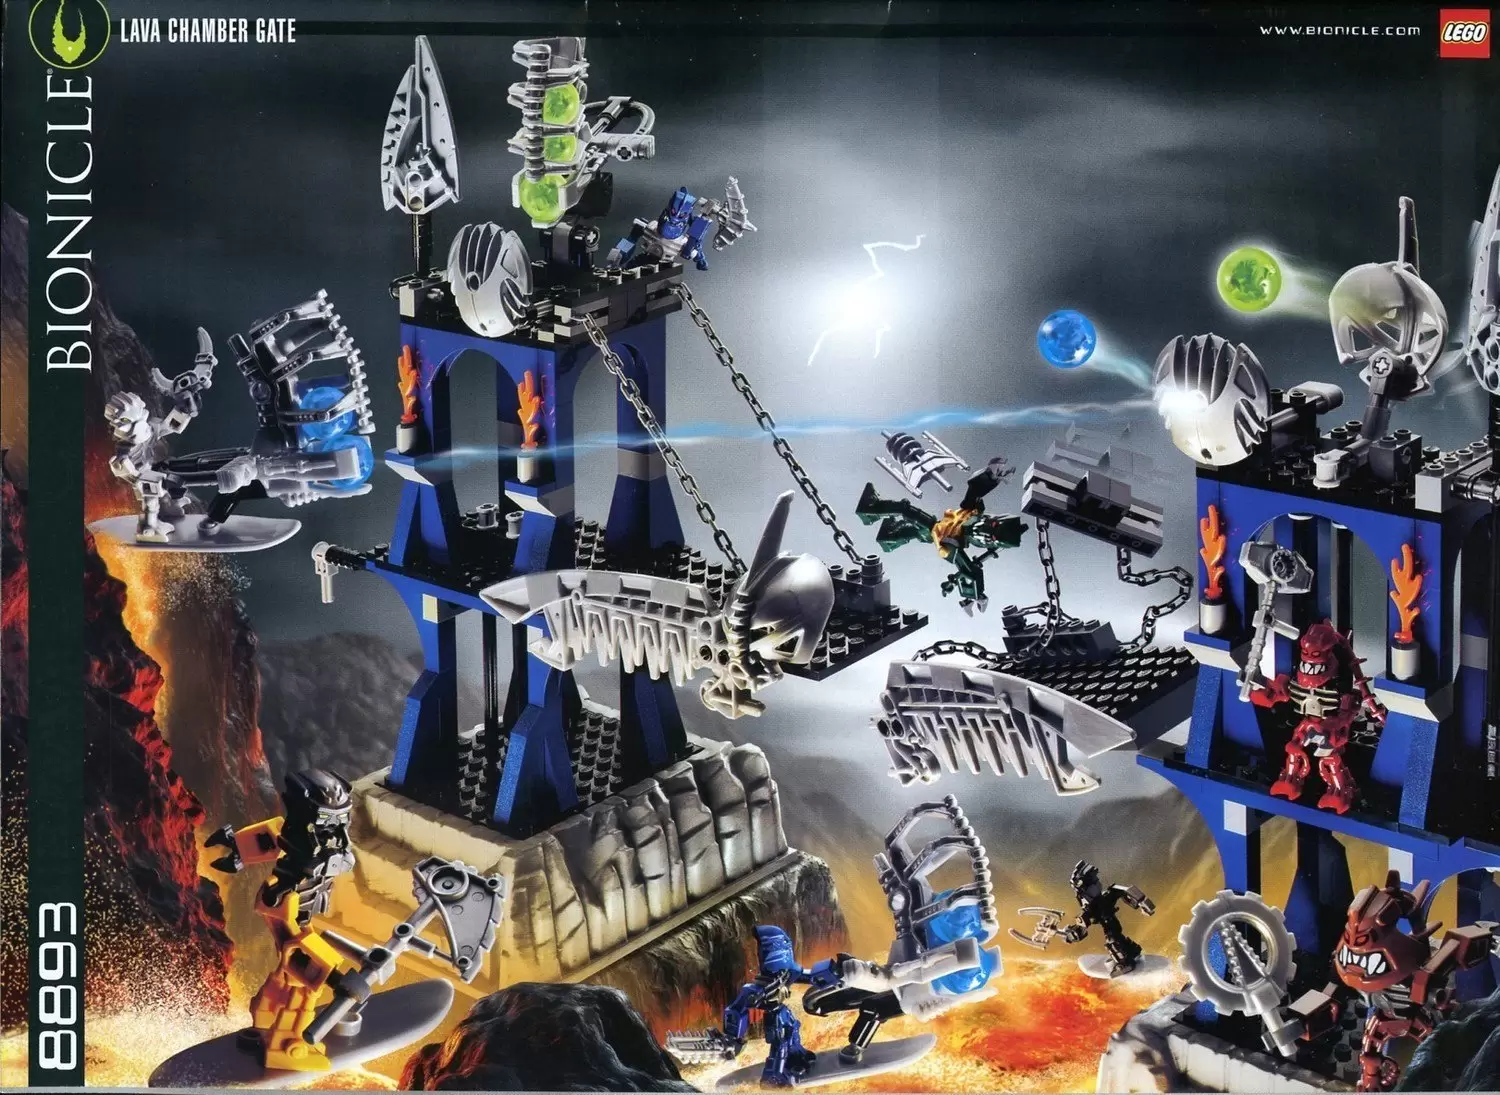 LEGO Bionicle - Lava Chamber Gate